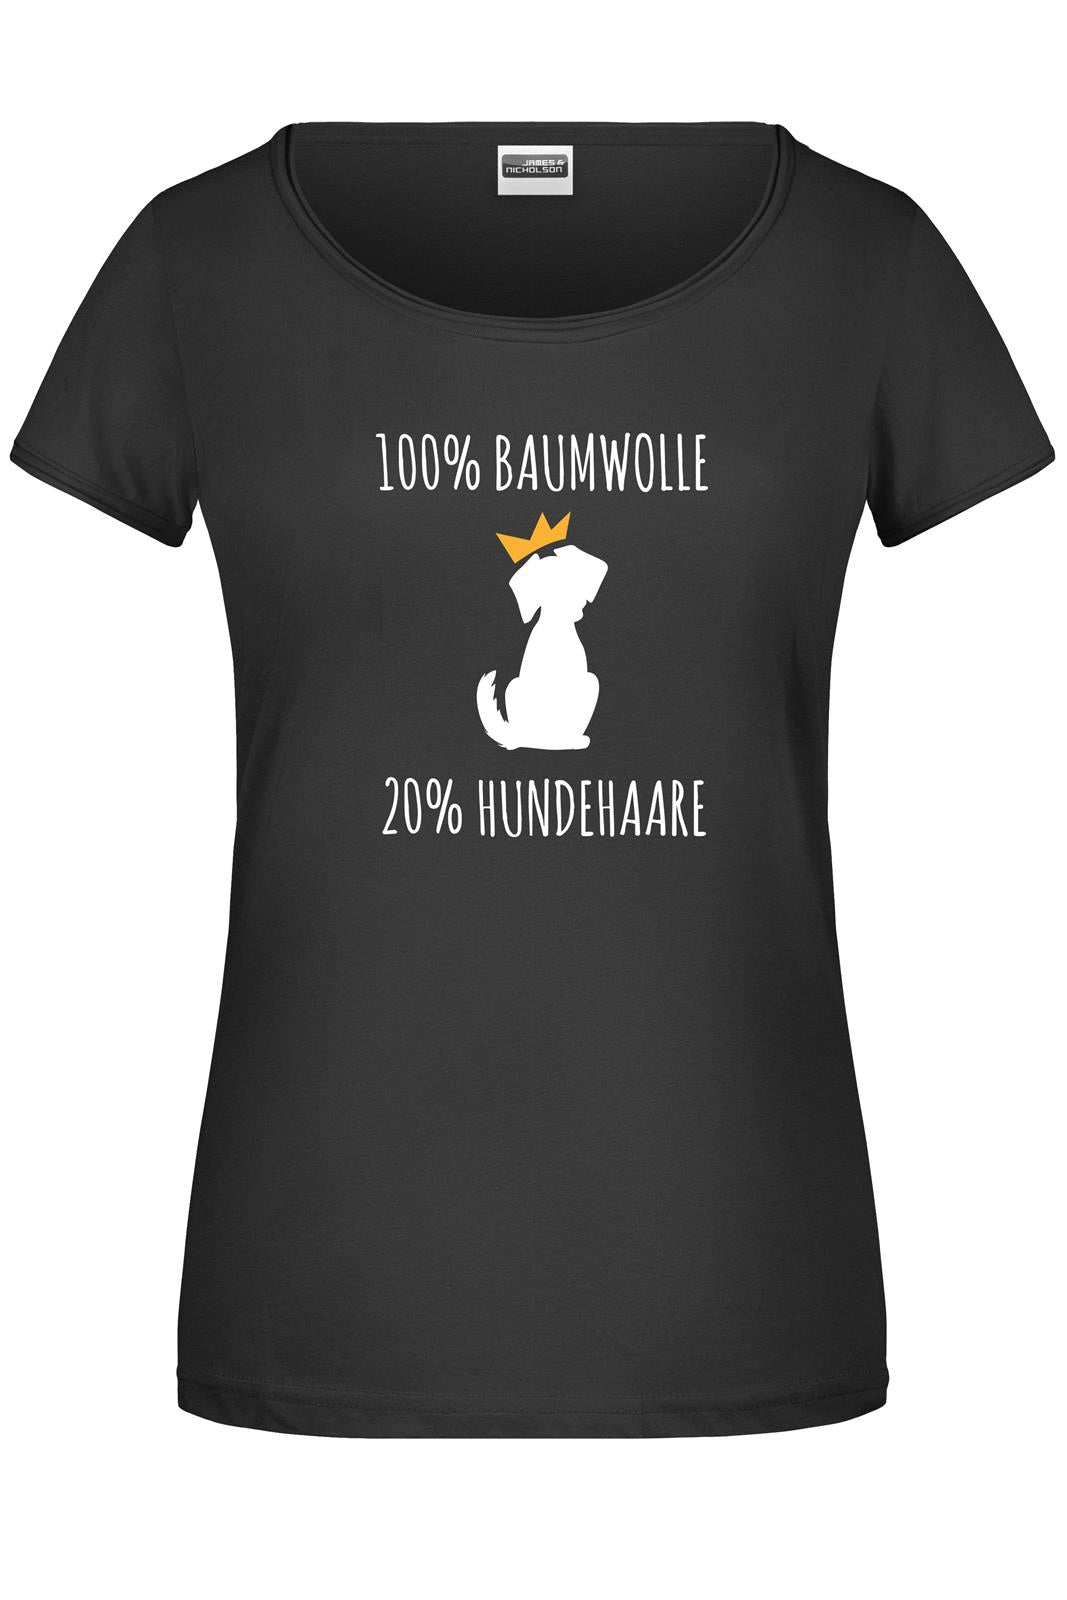 Bild: T-Shirt - 100% Baumwolle 20% Hundehaare Geschenkidee